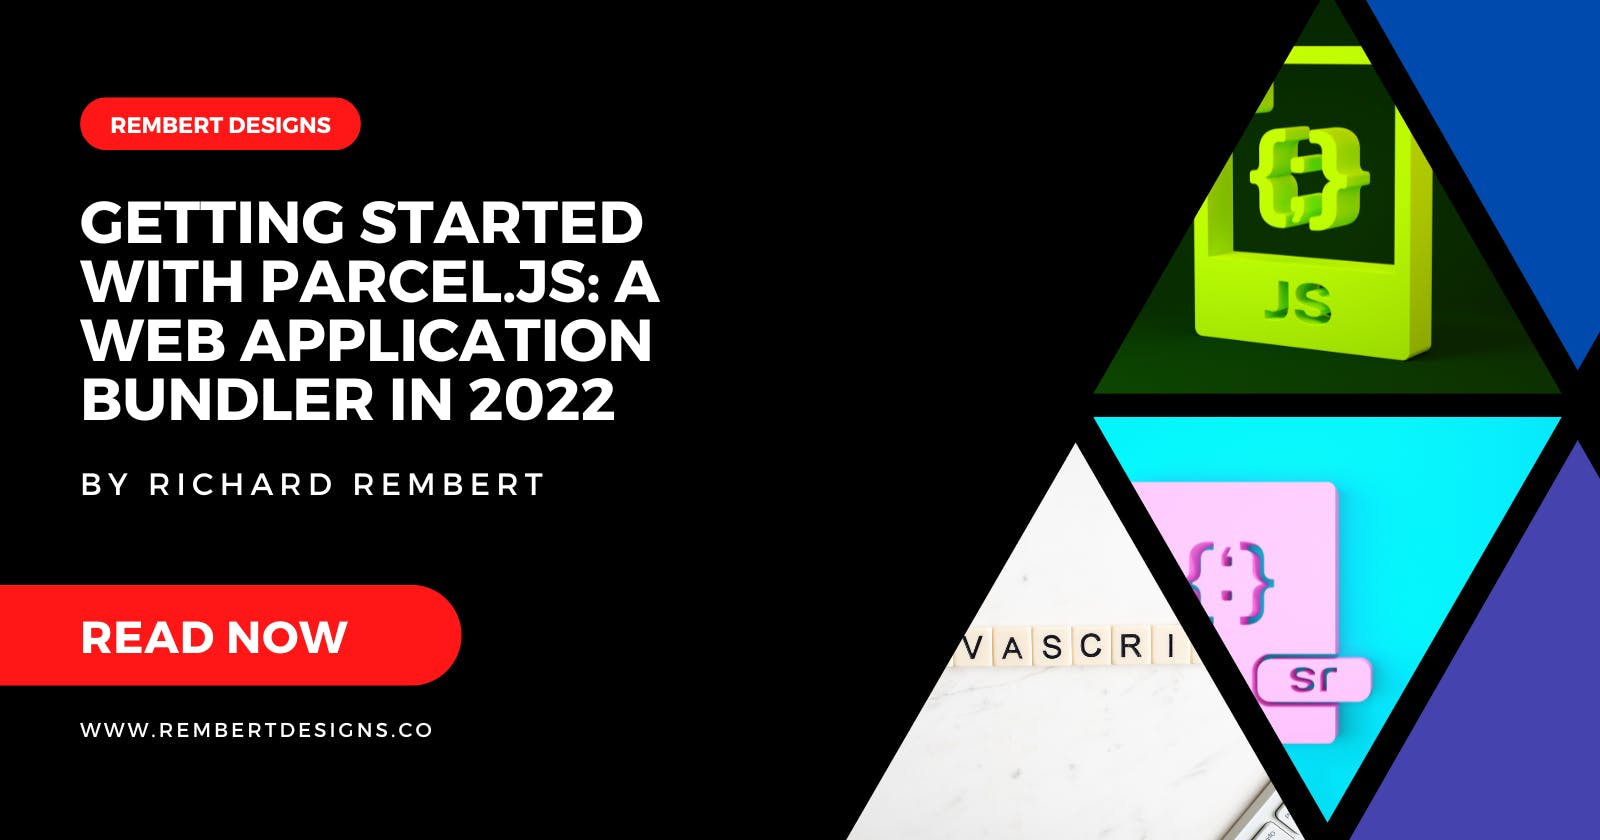 Parcel.js Introduction: A Web Application Bundler in 2022